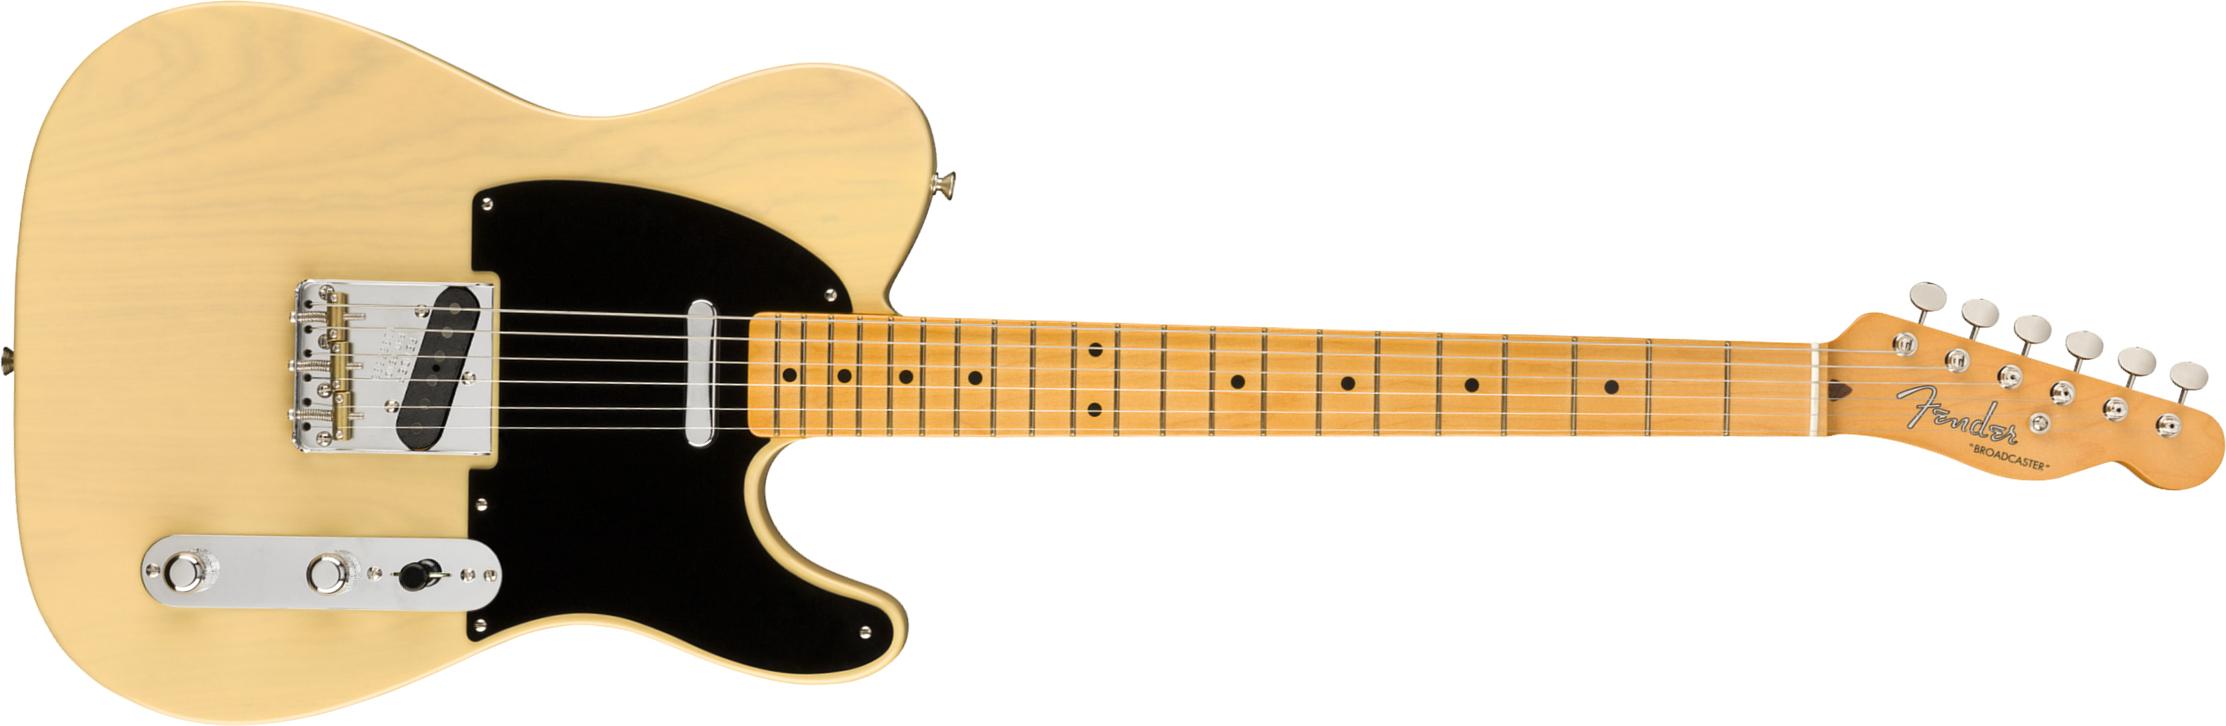 Fender Tele Broadcaster 70th Anniversary Usa Mn - Blackguard Blonde - Tel shape electric guitar - Main picture